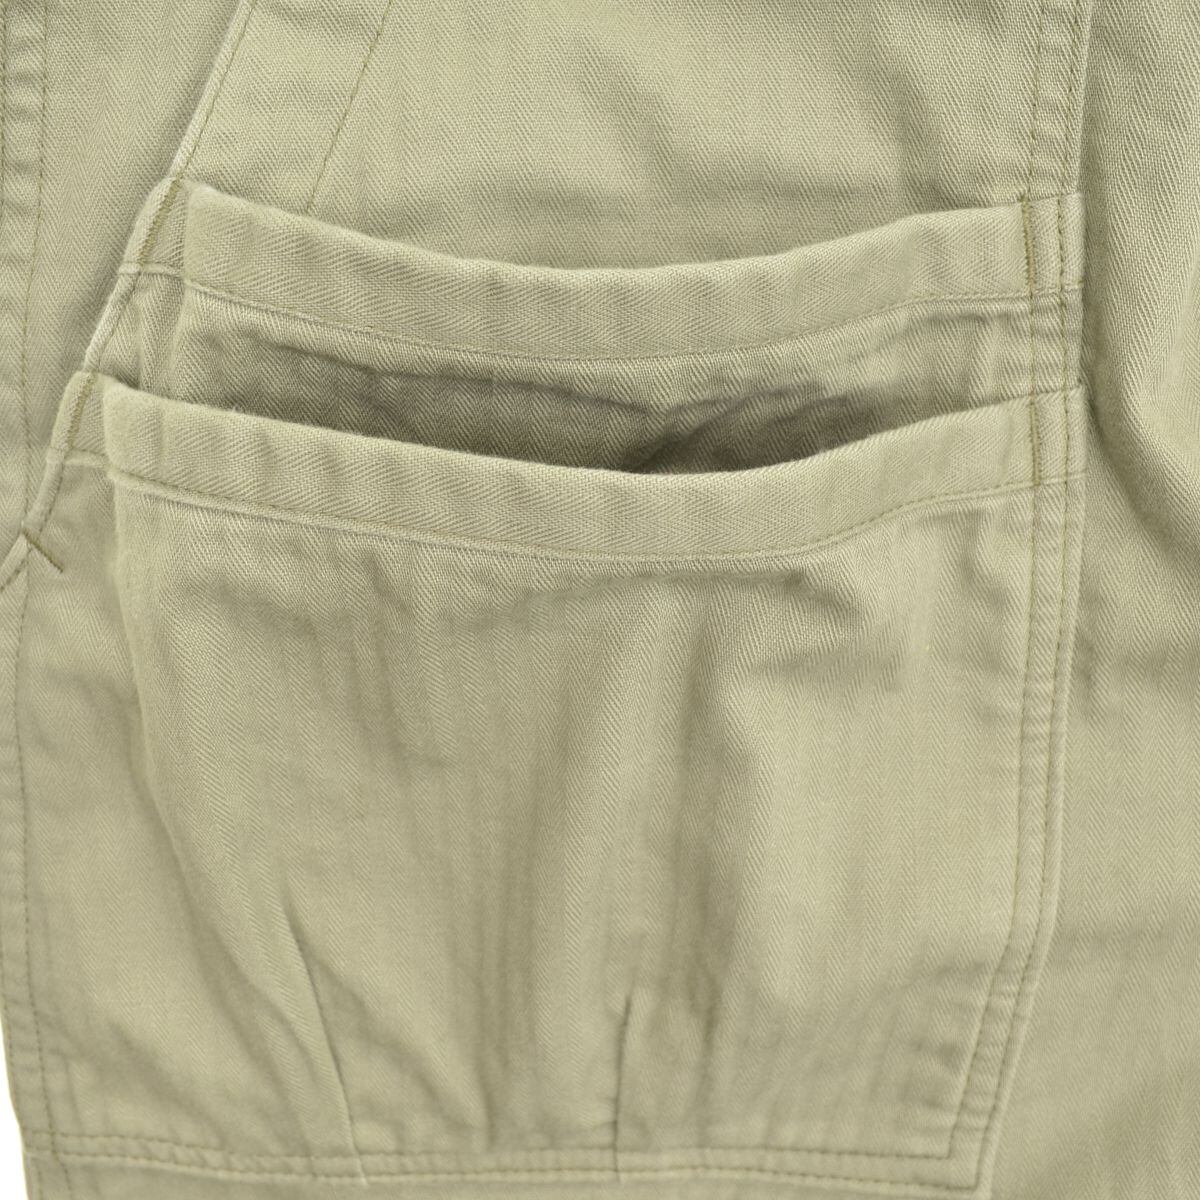 SASSAFRAS / ササフラス SF-221909 Overgrown Fatigue Pants (Herringbone) オーバーグラウン  ファティーグパンツ | カンフル京都裏寺店 powered by BASE